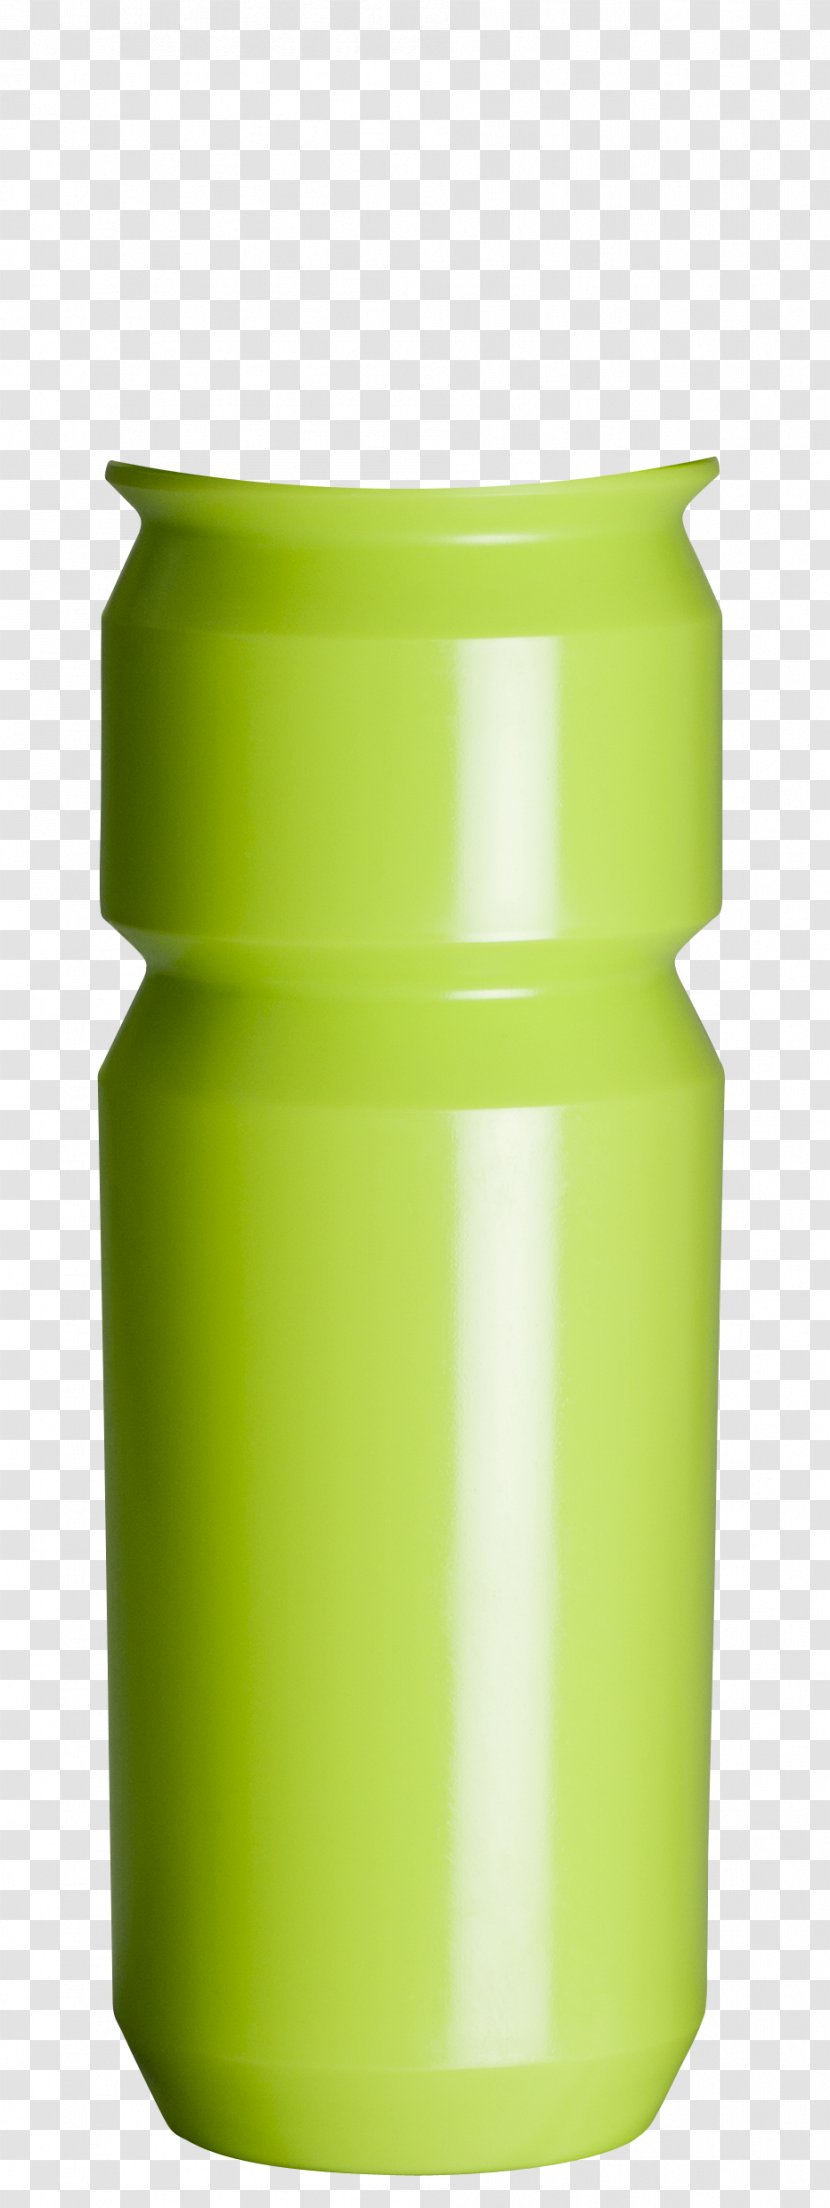 Shiva Bottle Screw Cap Yellow Closure - SHIVA Transparent PNG